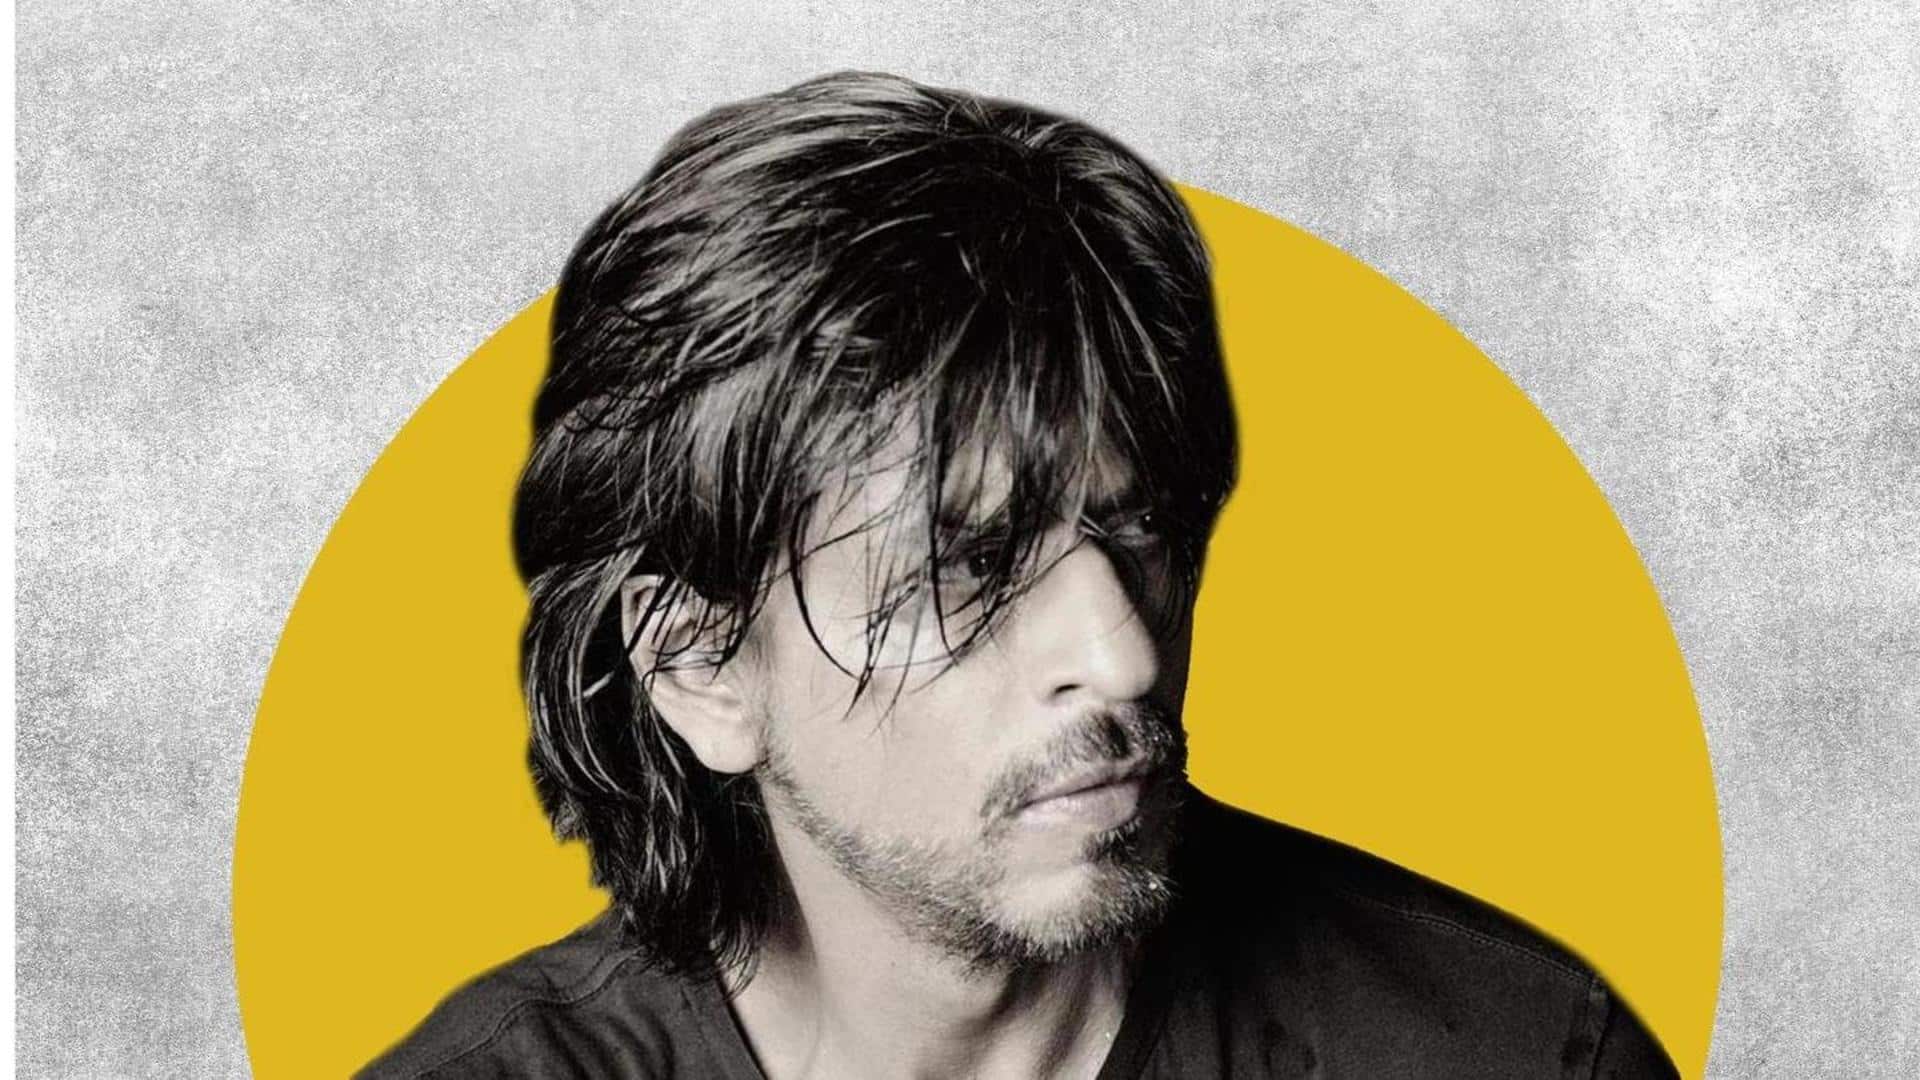 Fans storm Twitter asking SRK for 'Don 3' updates